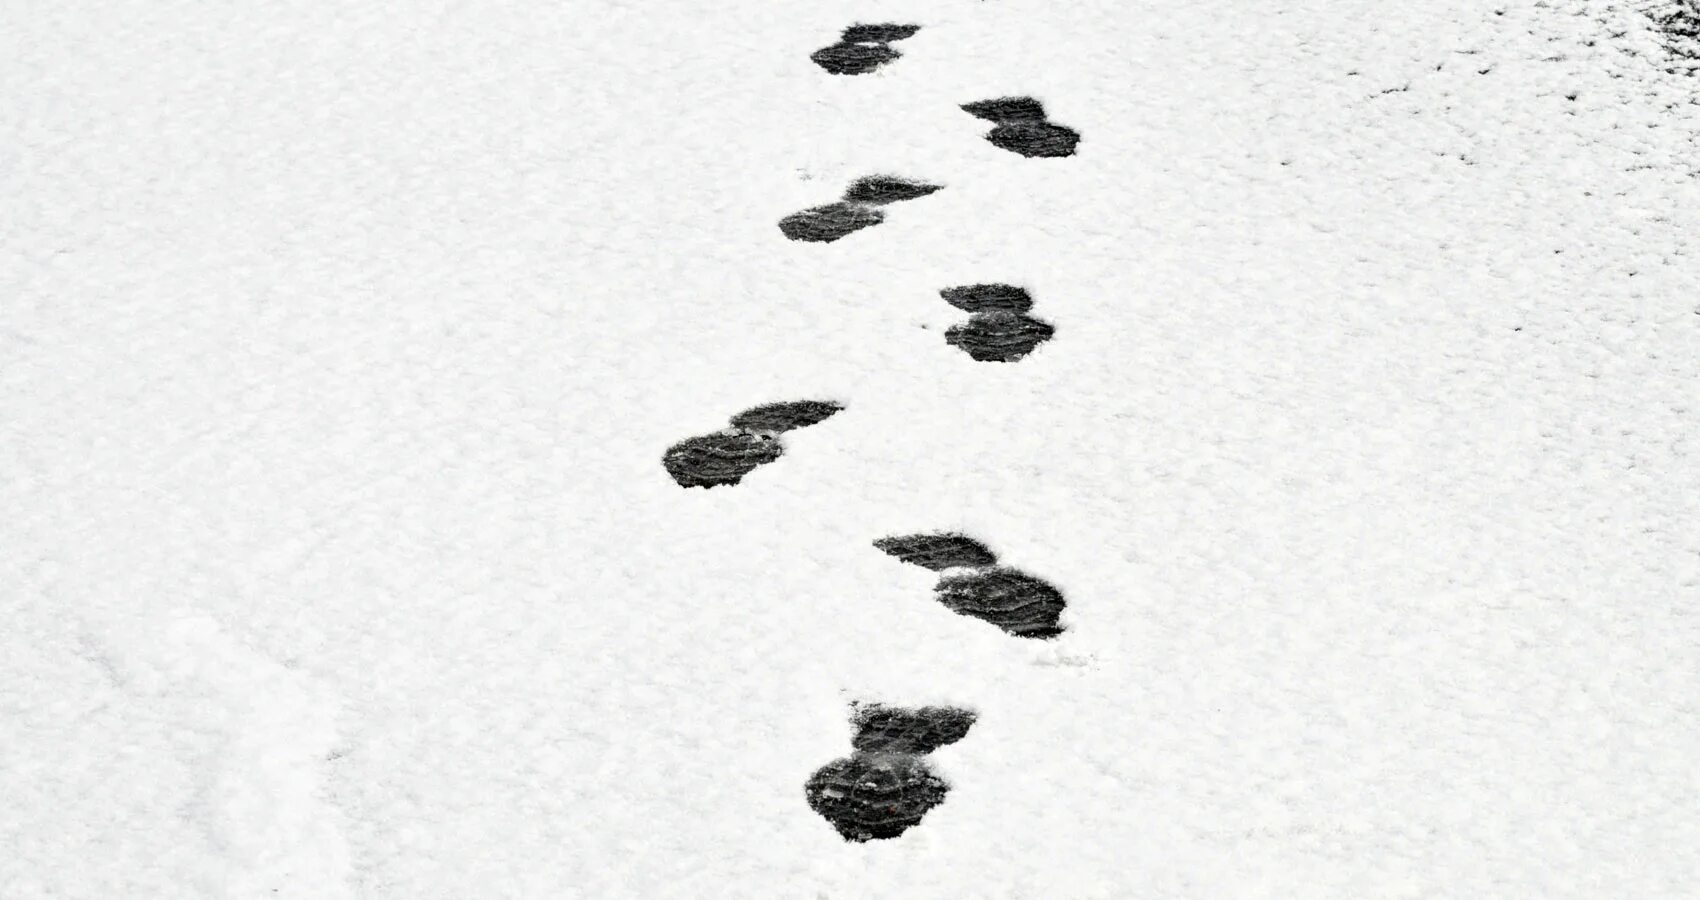 Включи следы. Следы на снегу. Следы человека на снегу. Дорожка следов на снегу. Следы в сугробе.